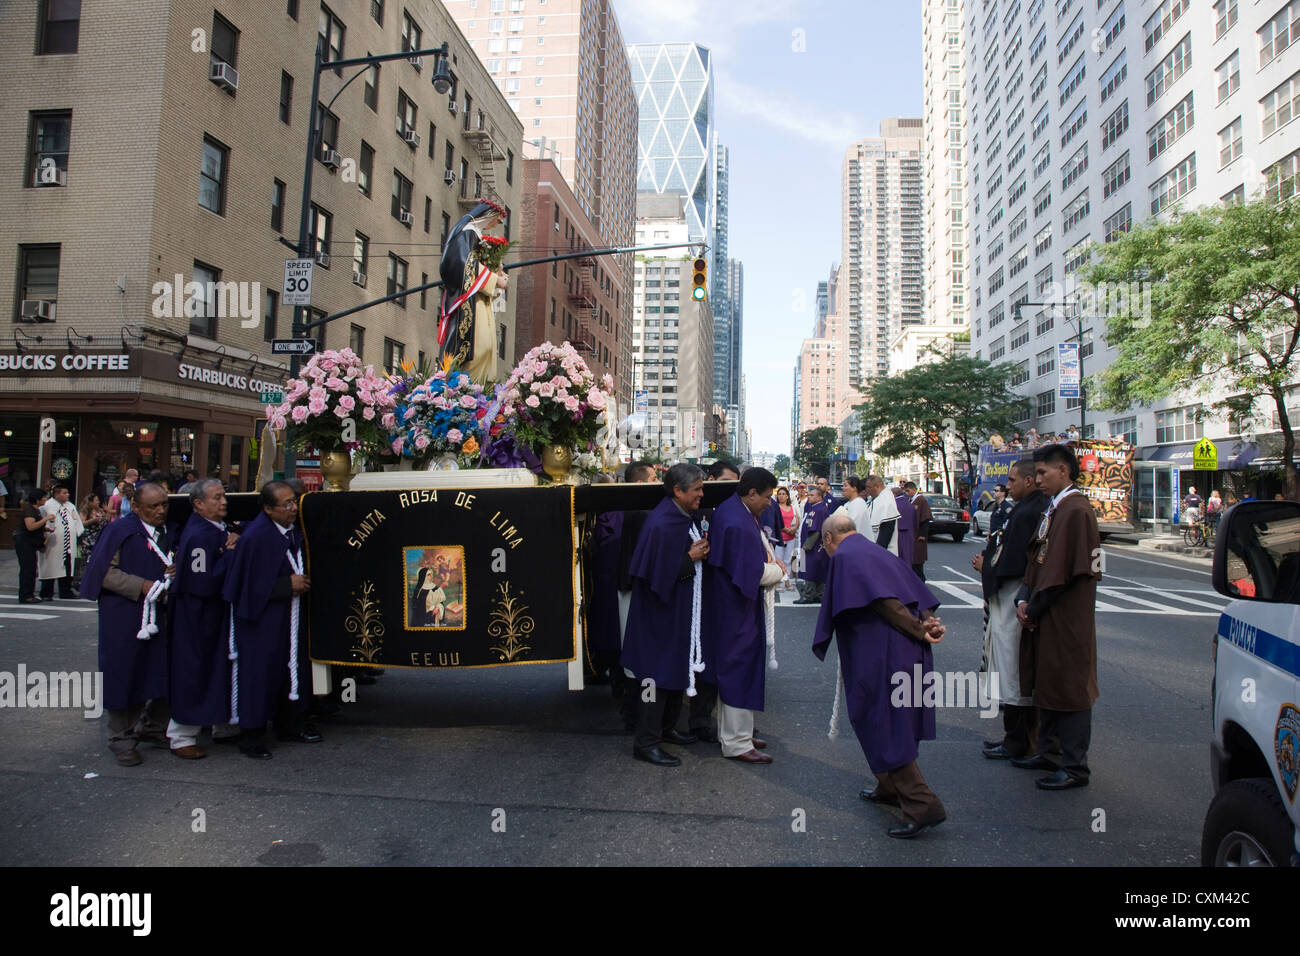 The annual Santa Rosa de Lima Estados Unidos EEUU procession in New York Stock Photo